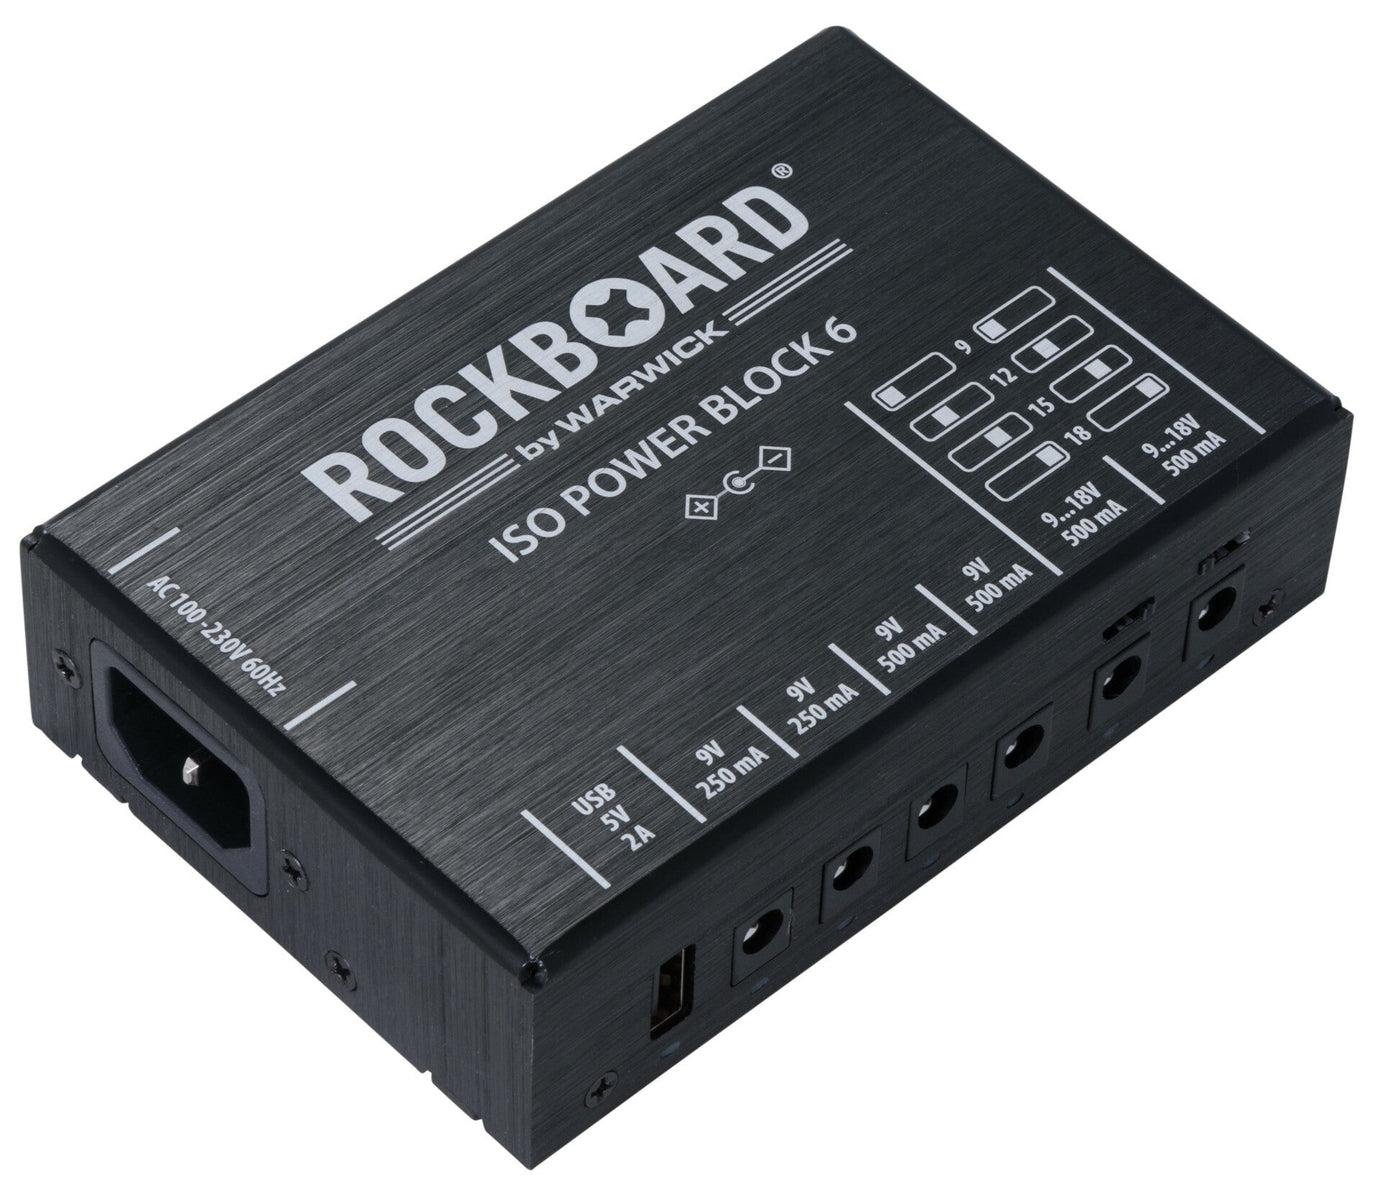 RockBoard ISO Power Blocks IEC | V6 IEC